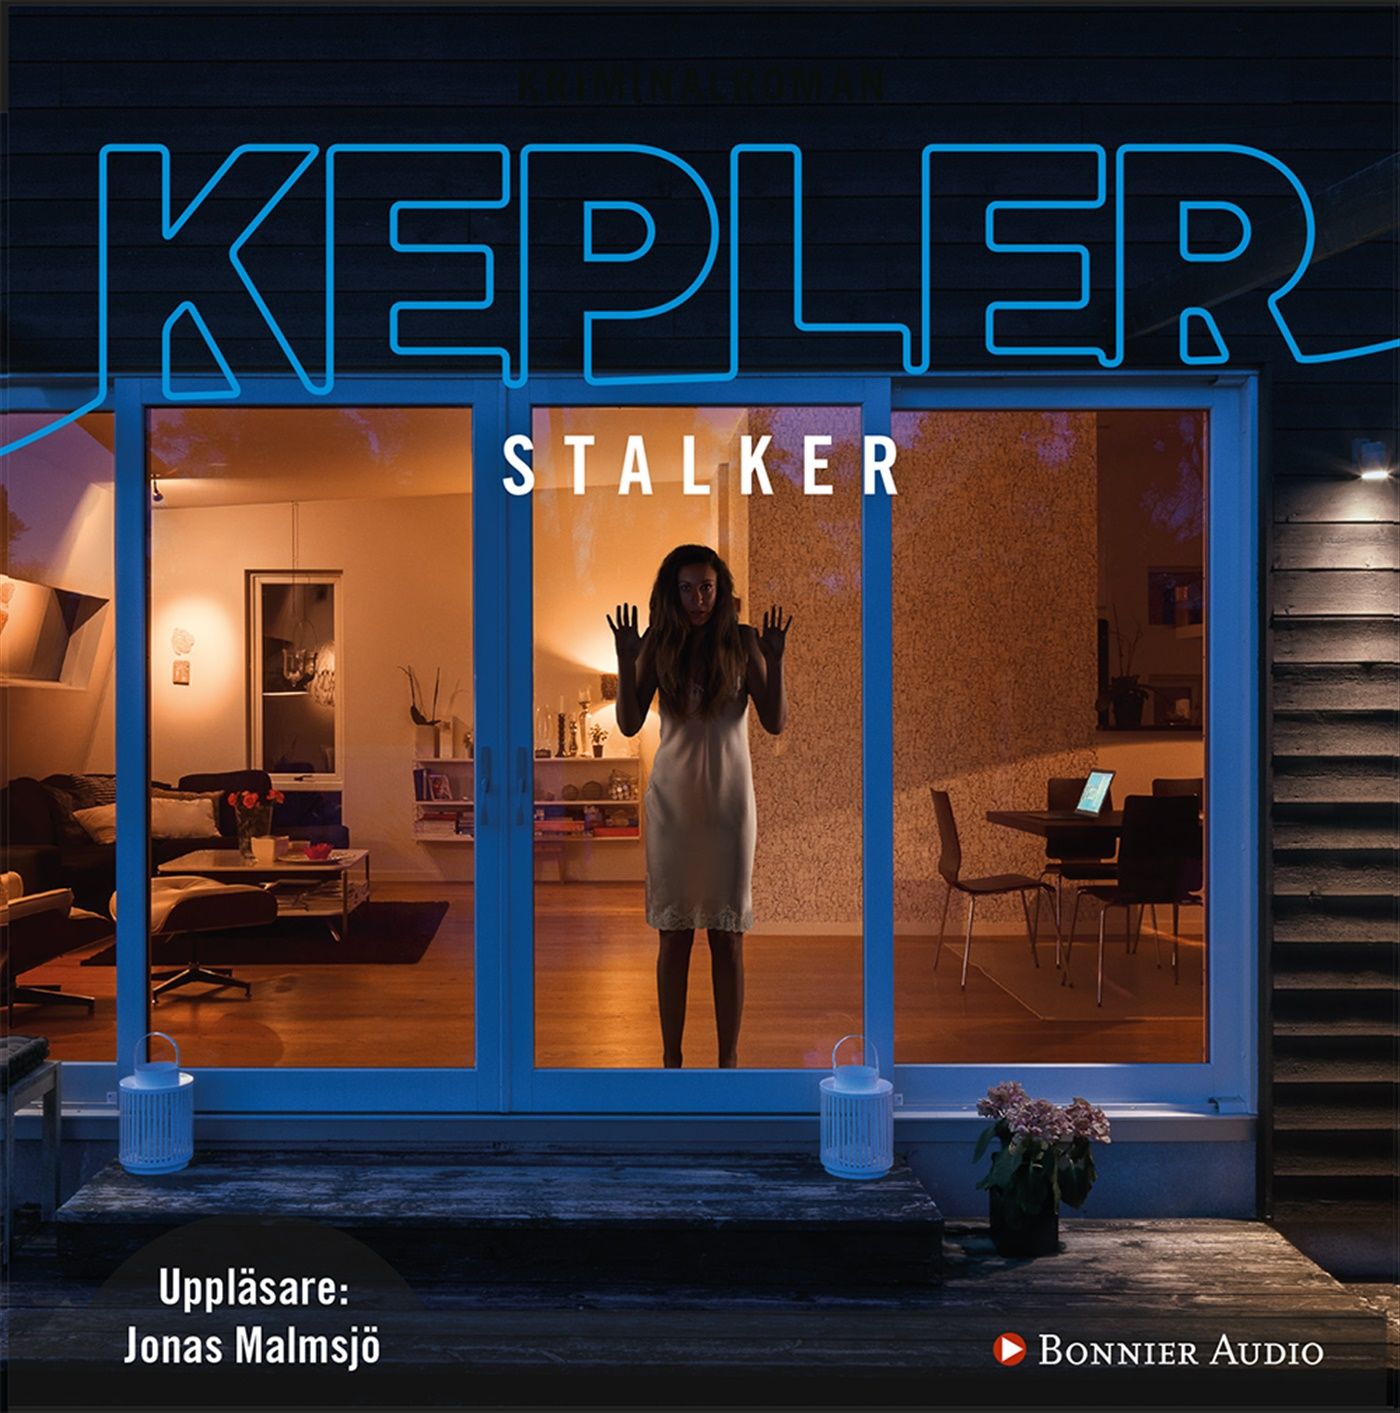 Stalker, ljudbok av Lars Kepler